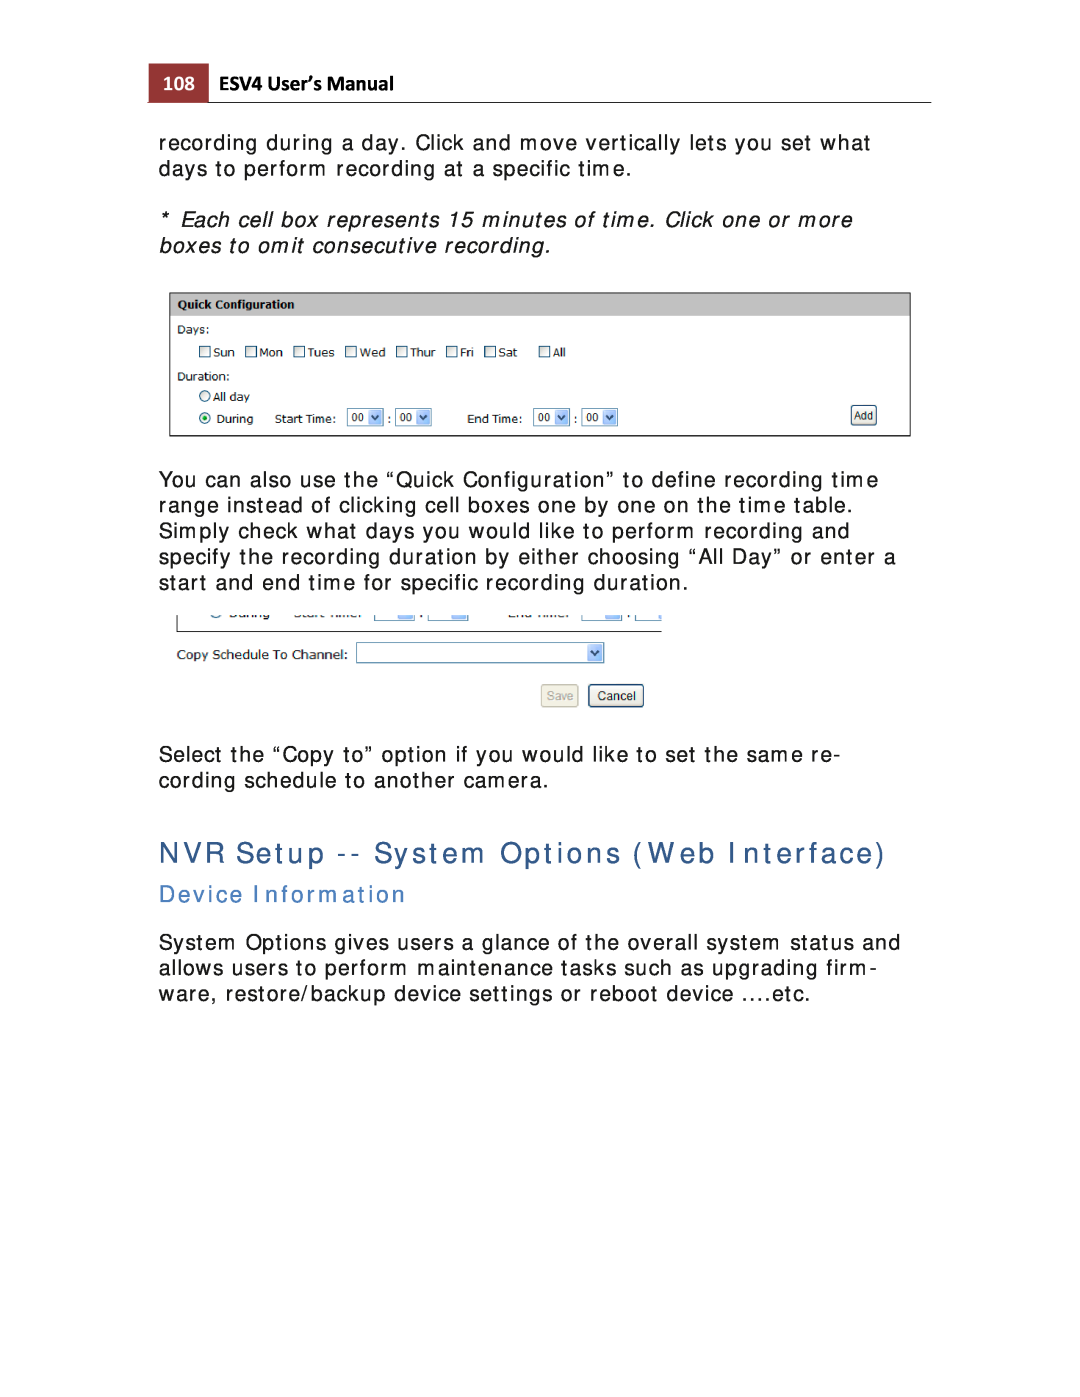 Toshiba ESV41T user manual NVR Setup --System Options Web Interface, Device Information, 108ESV4 User’s Manual 